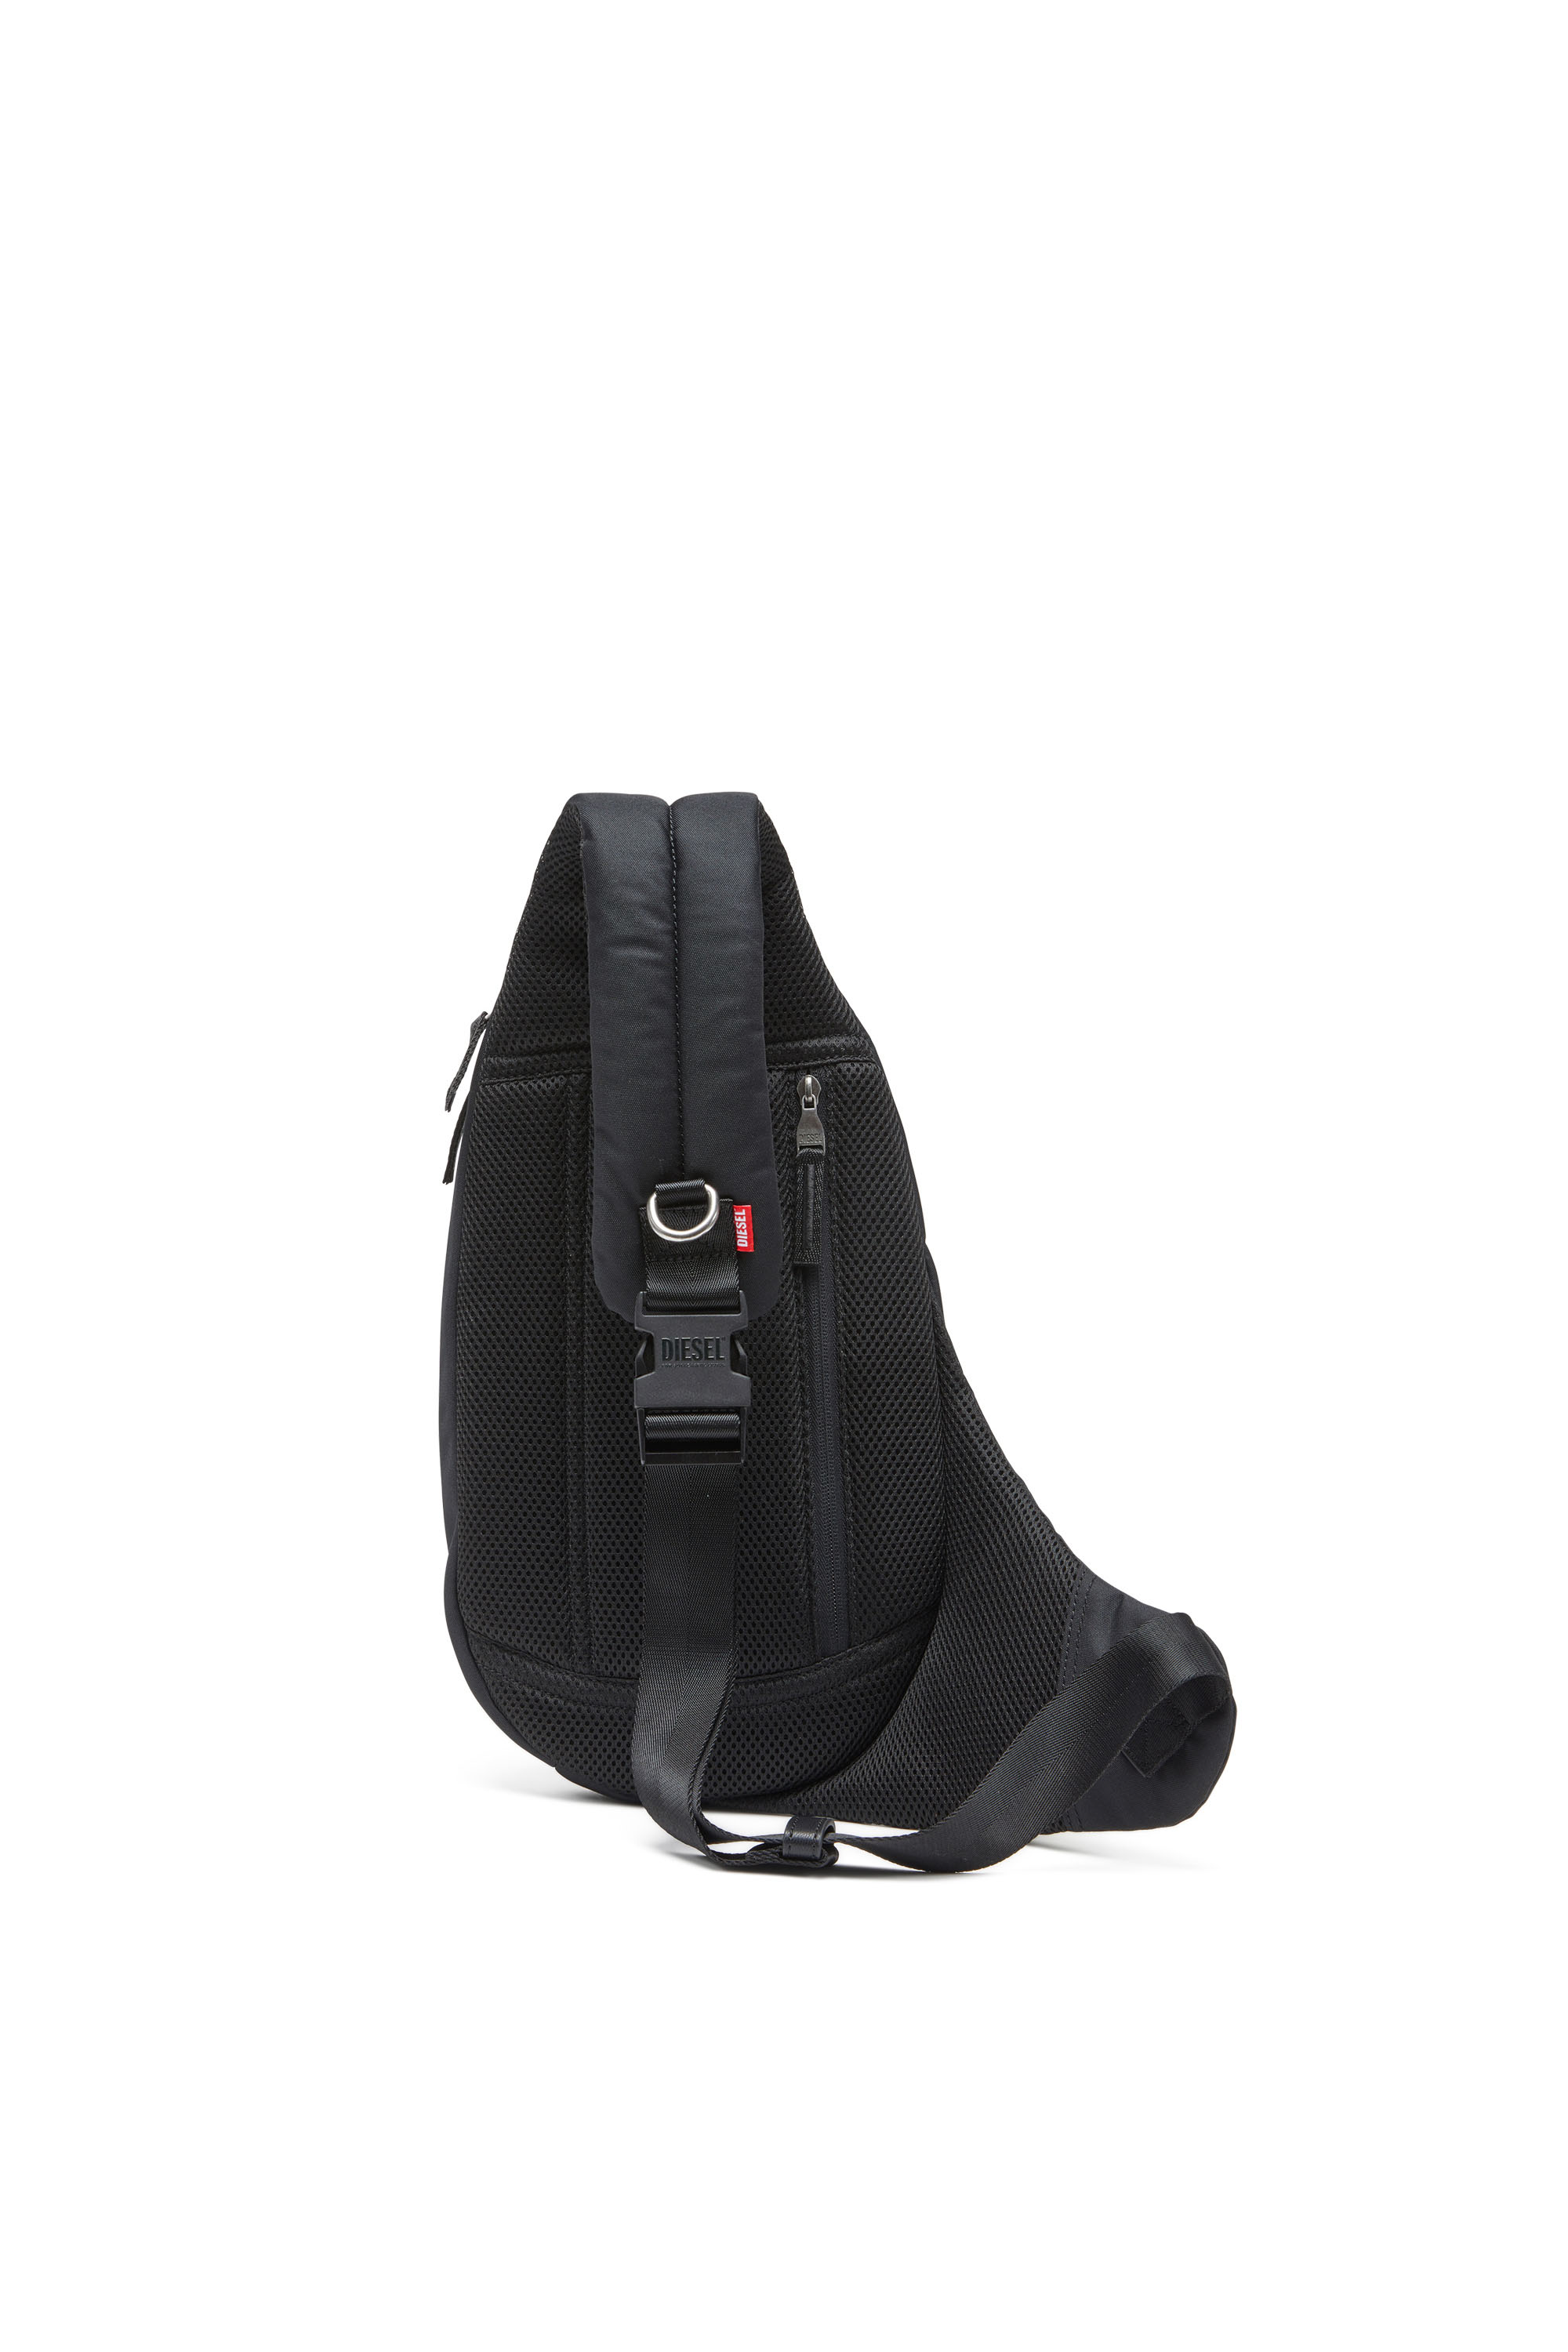 Diesel - 1DR-POD SLING BAG, Male 1DR-Pod-Hard shell sling bag in ブラック - Image 2